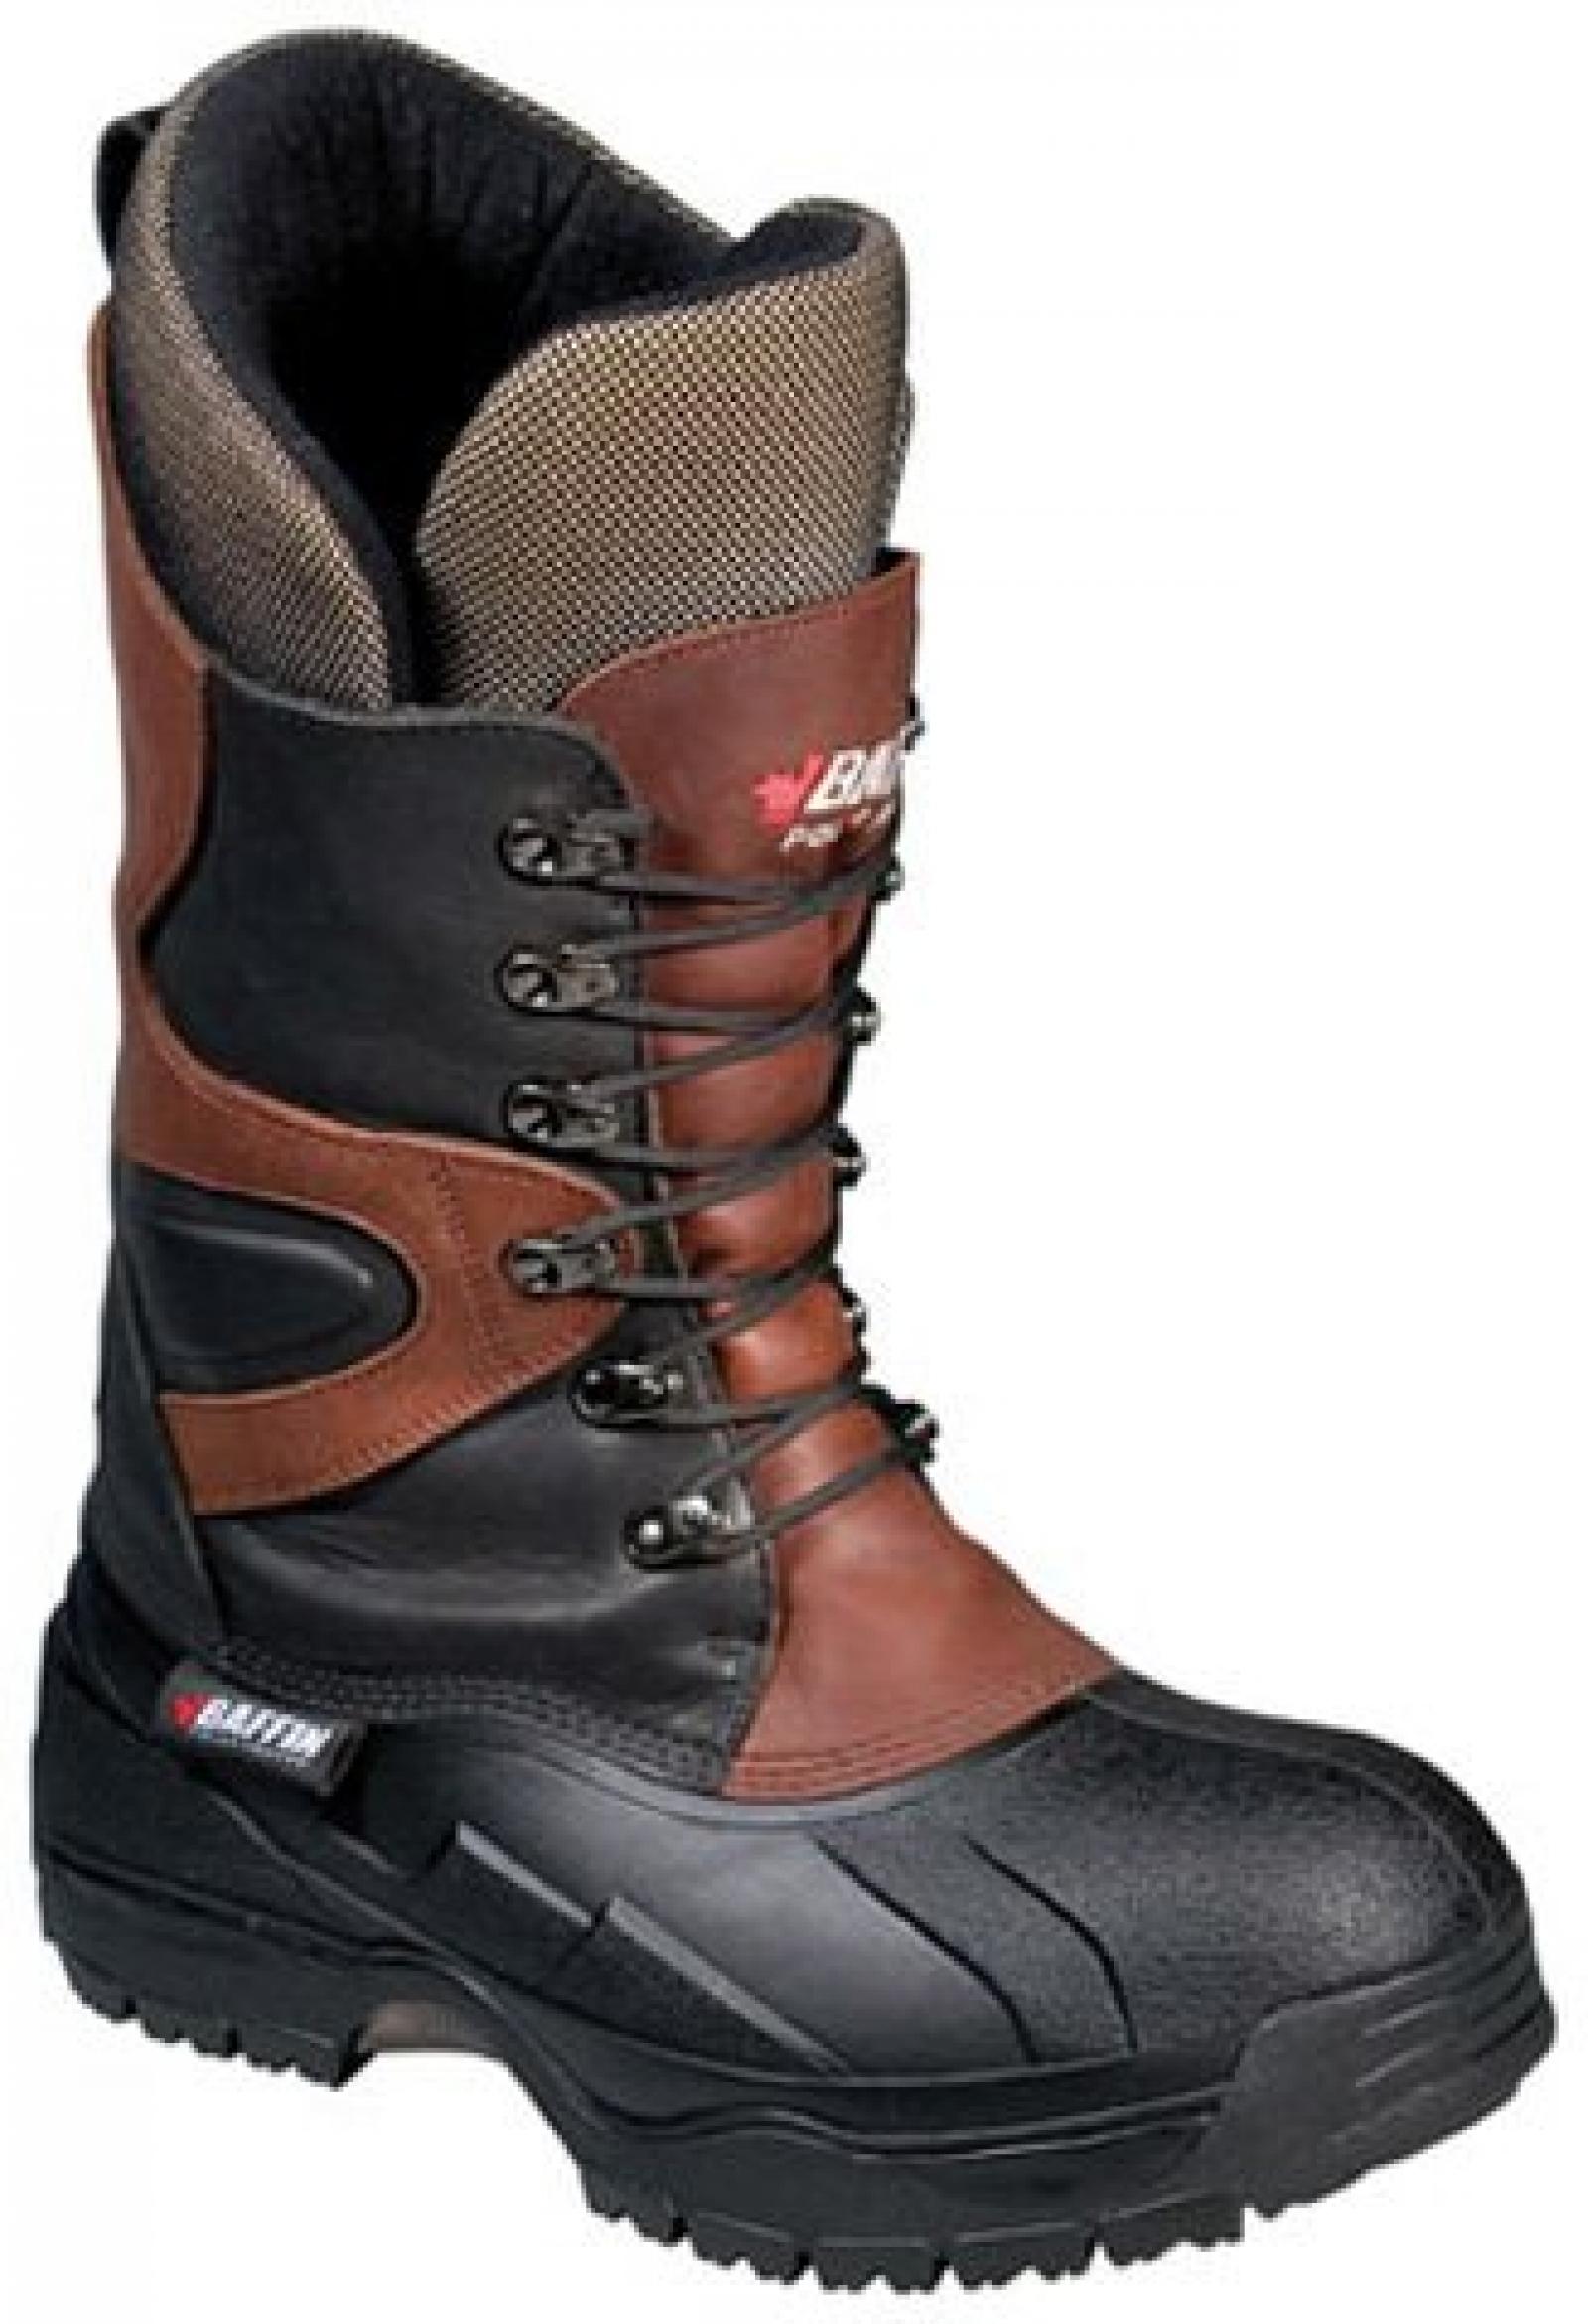 Baffin Apex Leather Boot (8) Black/Bark 